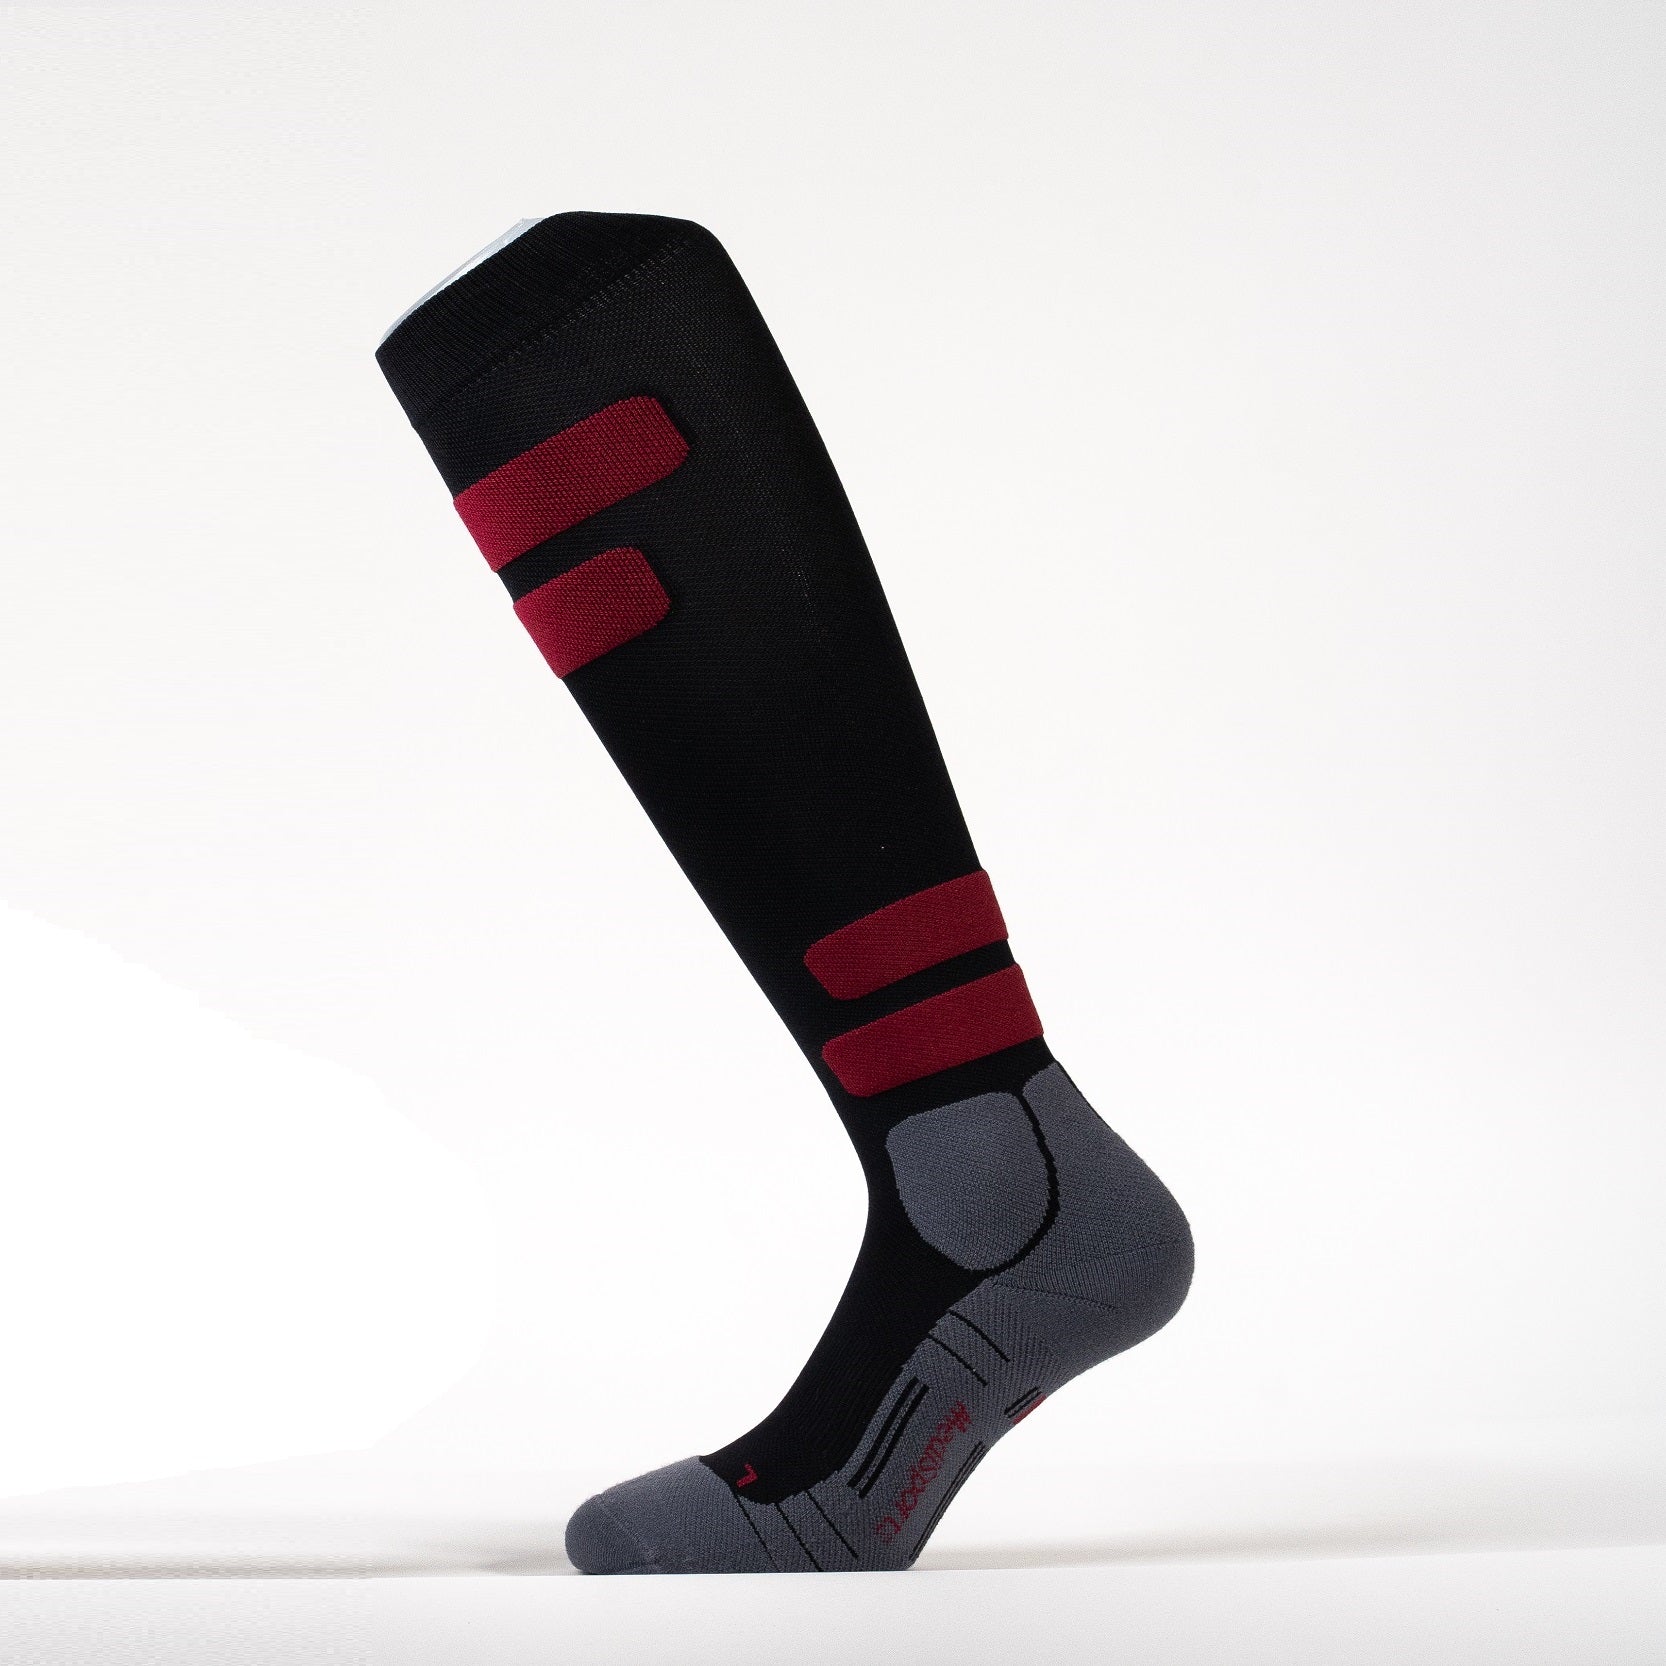 MediSports Ignite Performance Socks (20-30 mmHg) - Black/Cradinal Red